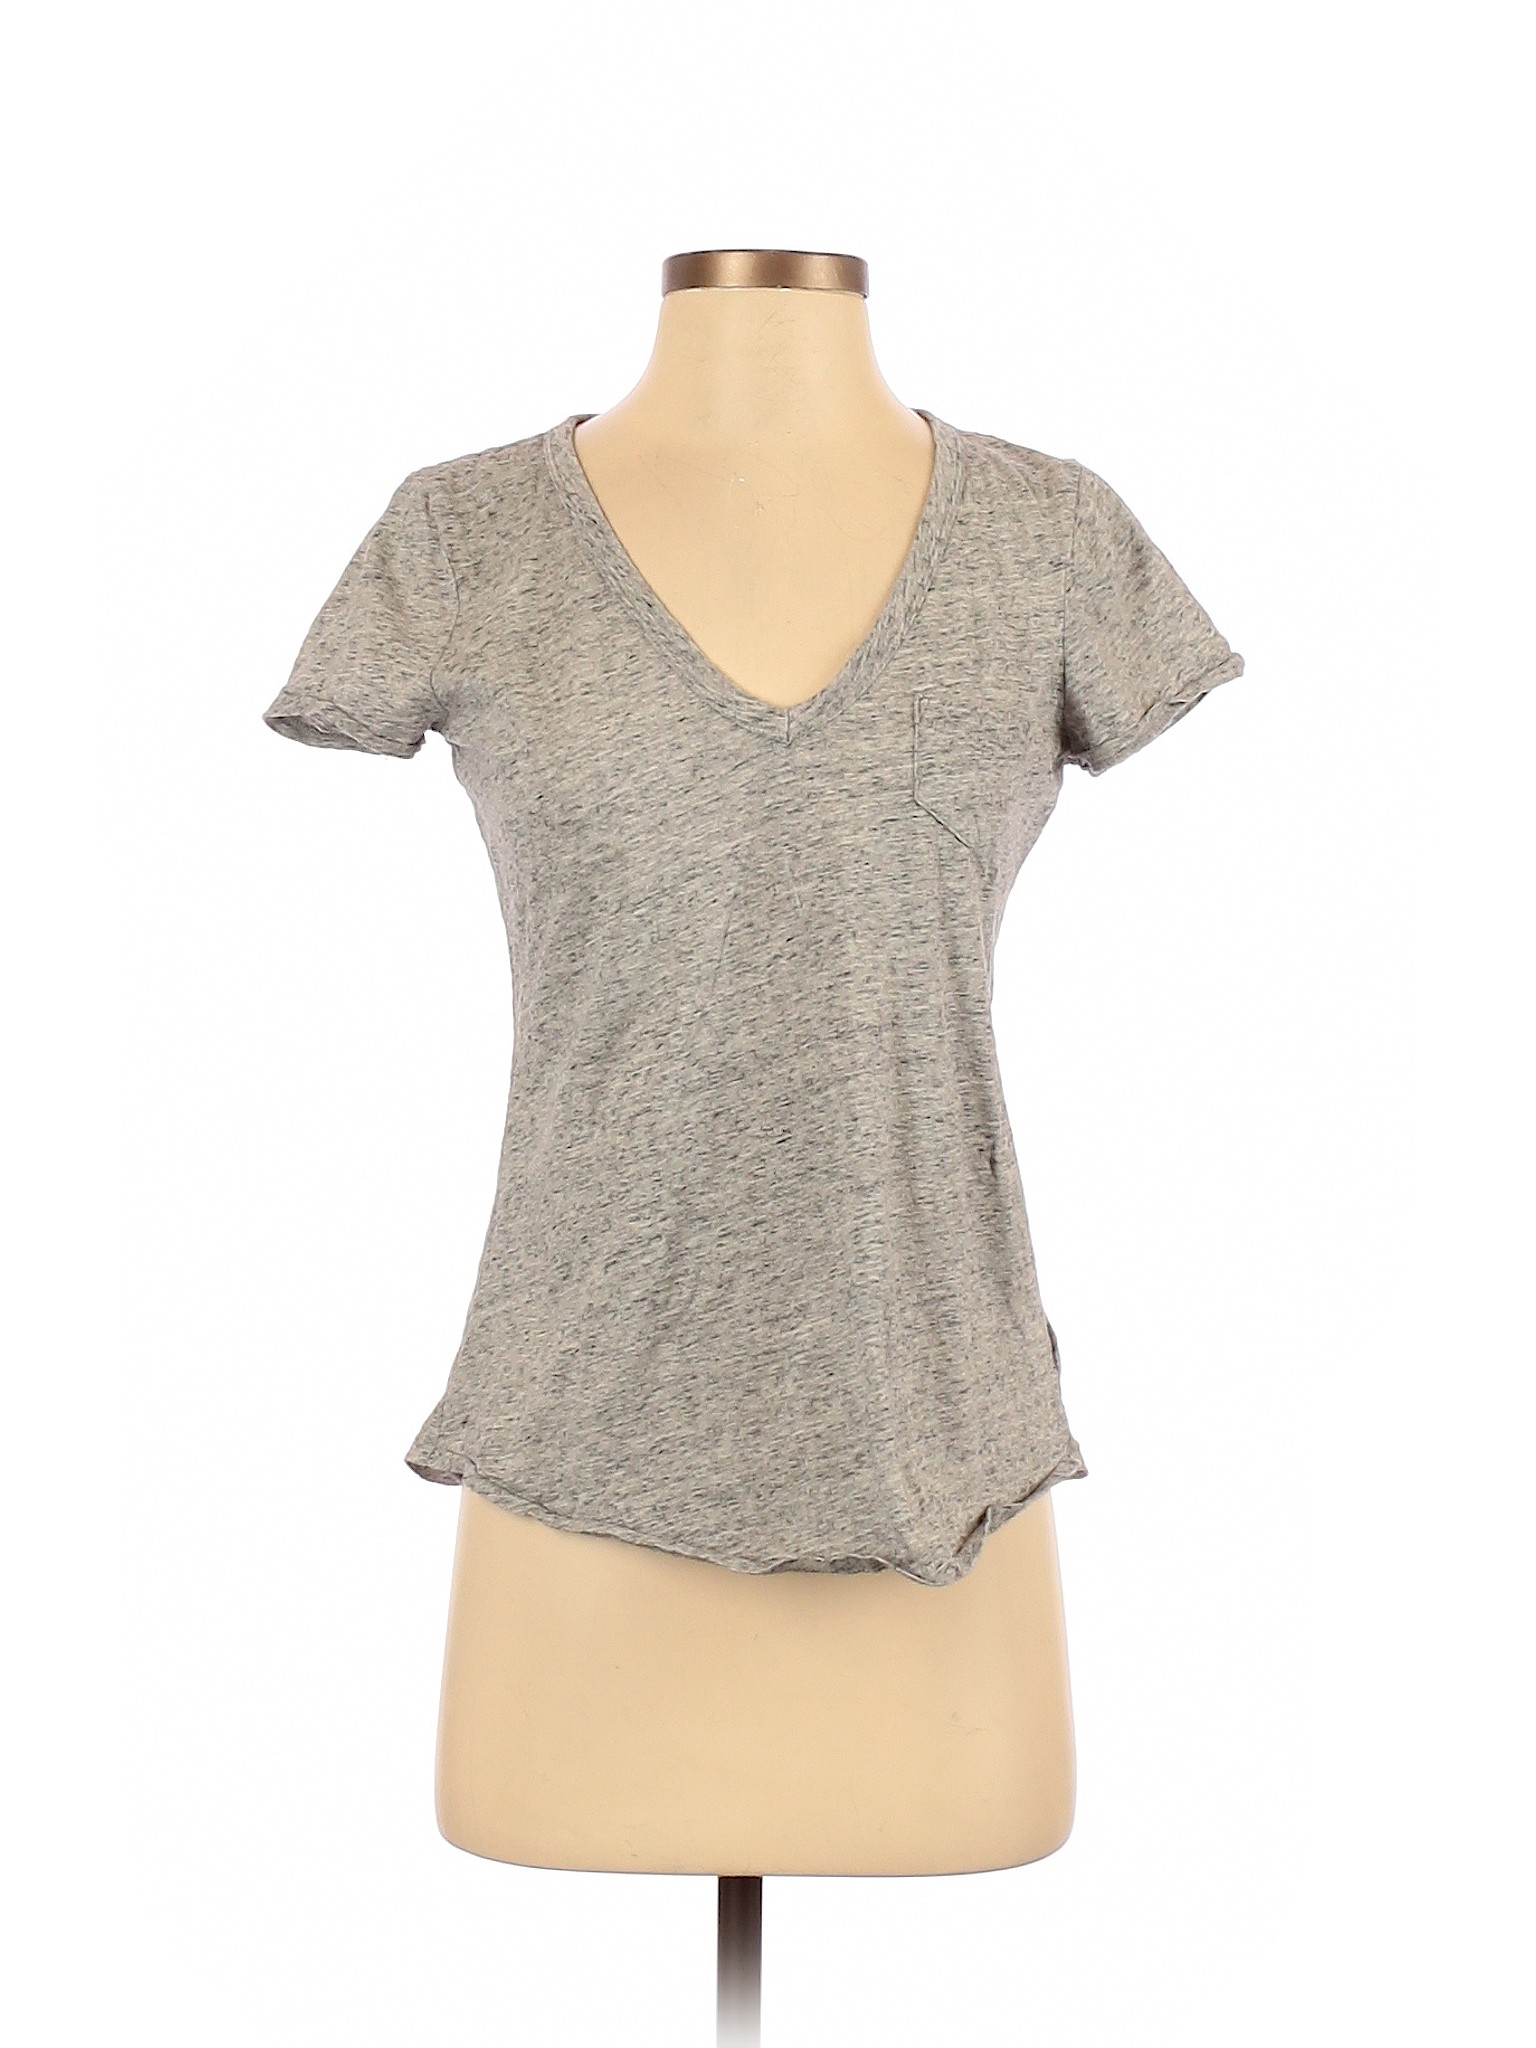 Gap Women Gray Short Sleeve T-Shirt XS | eBay